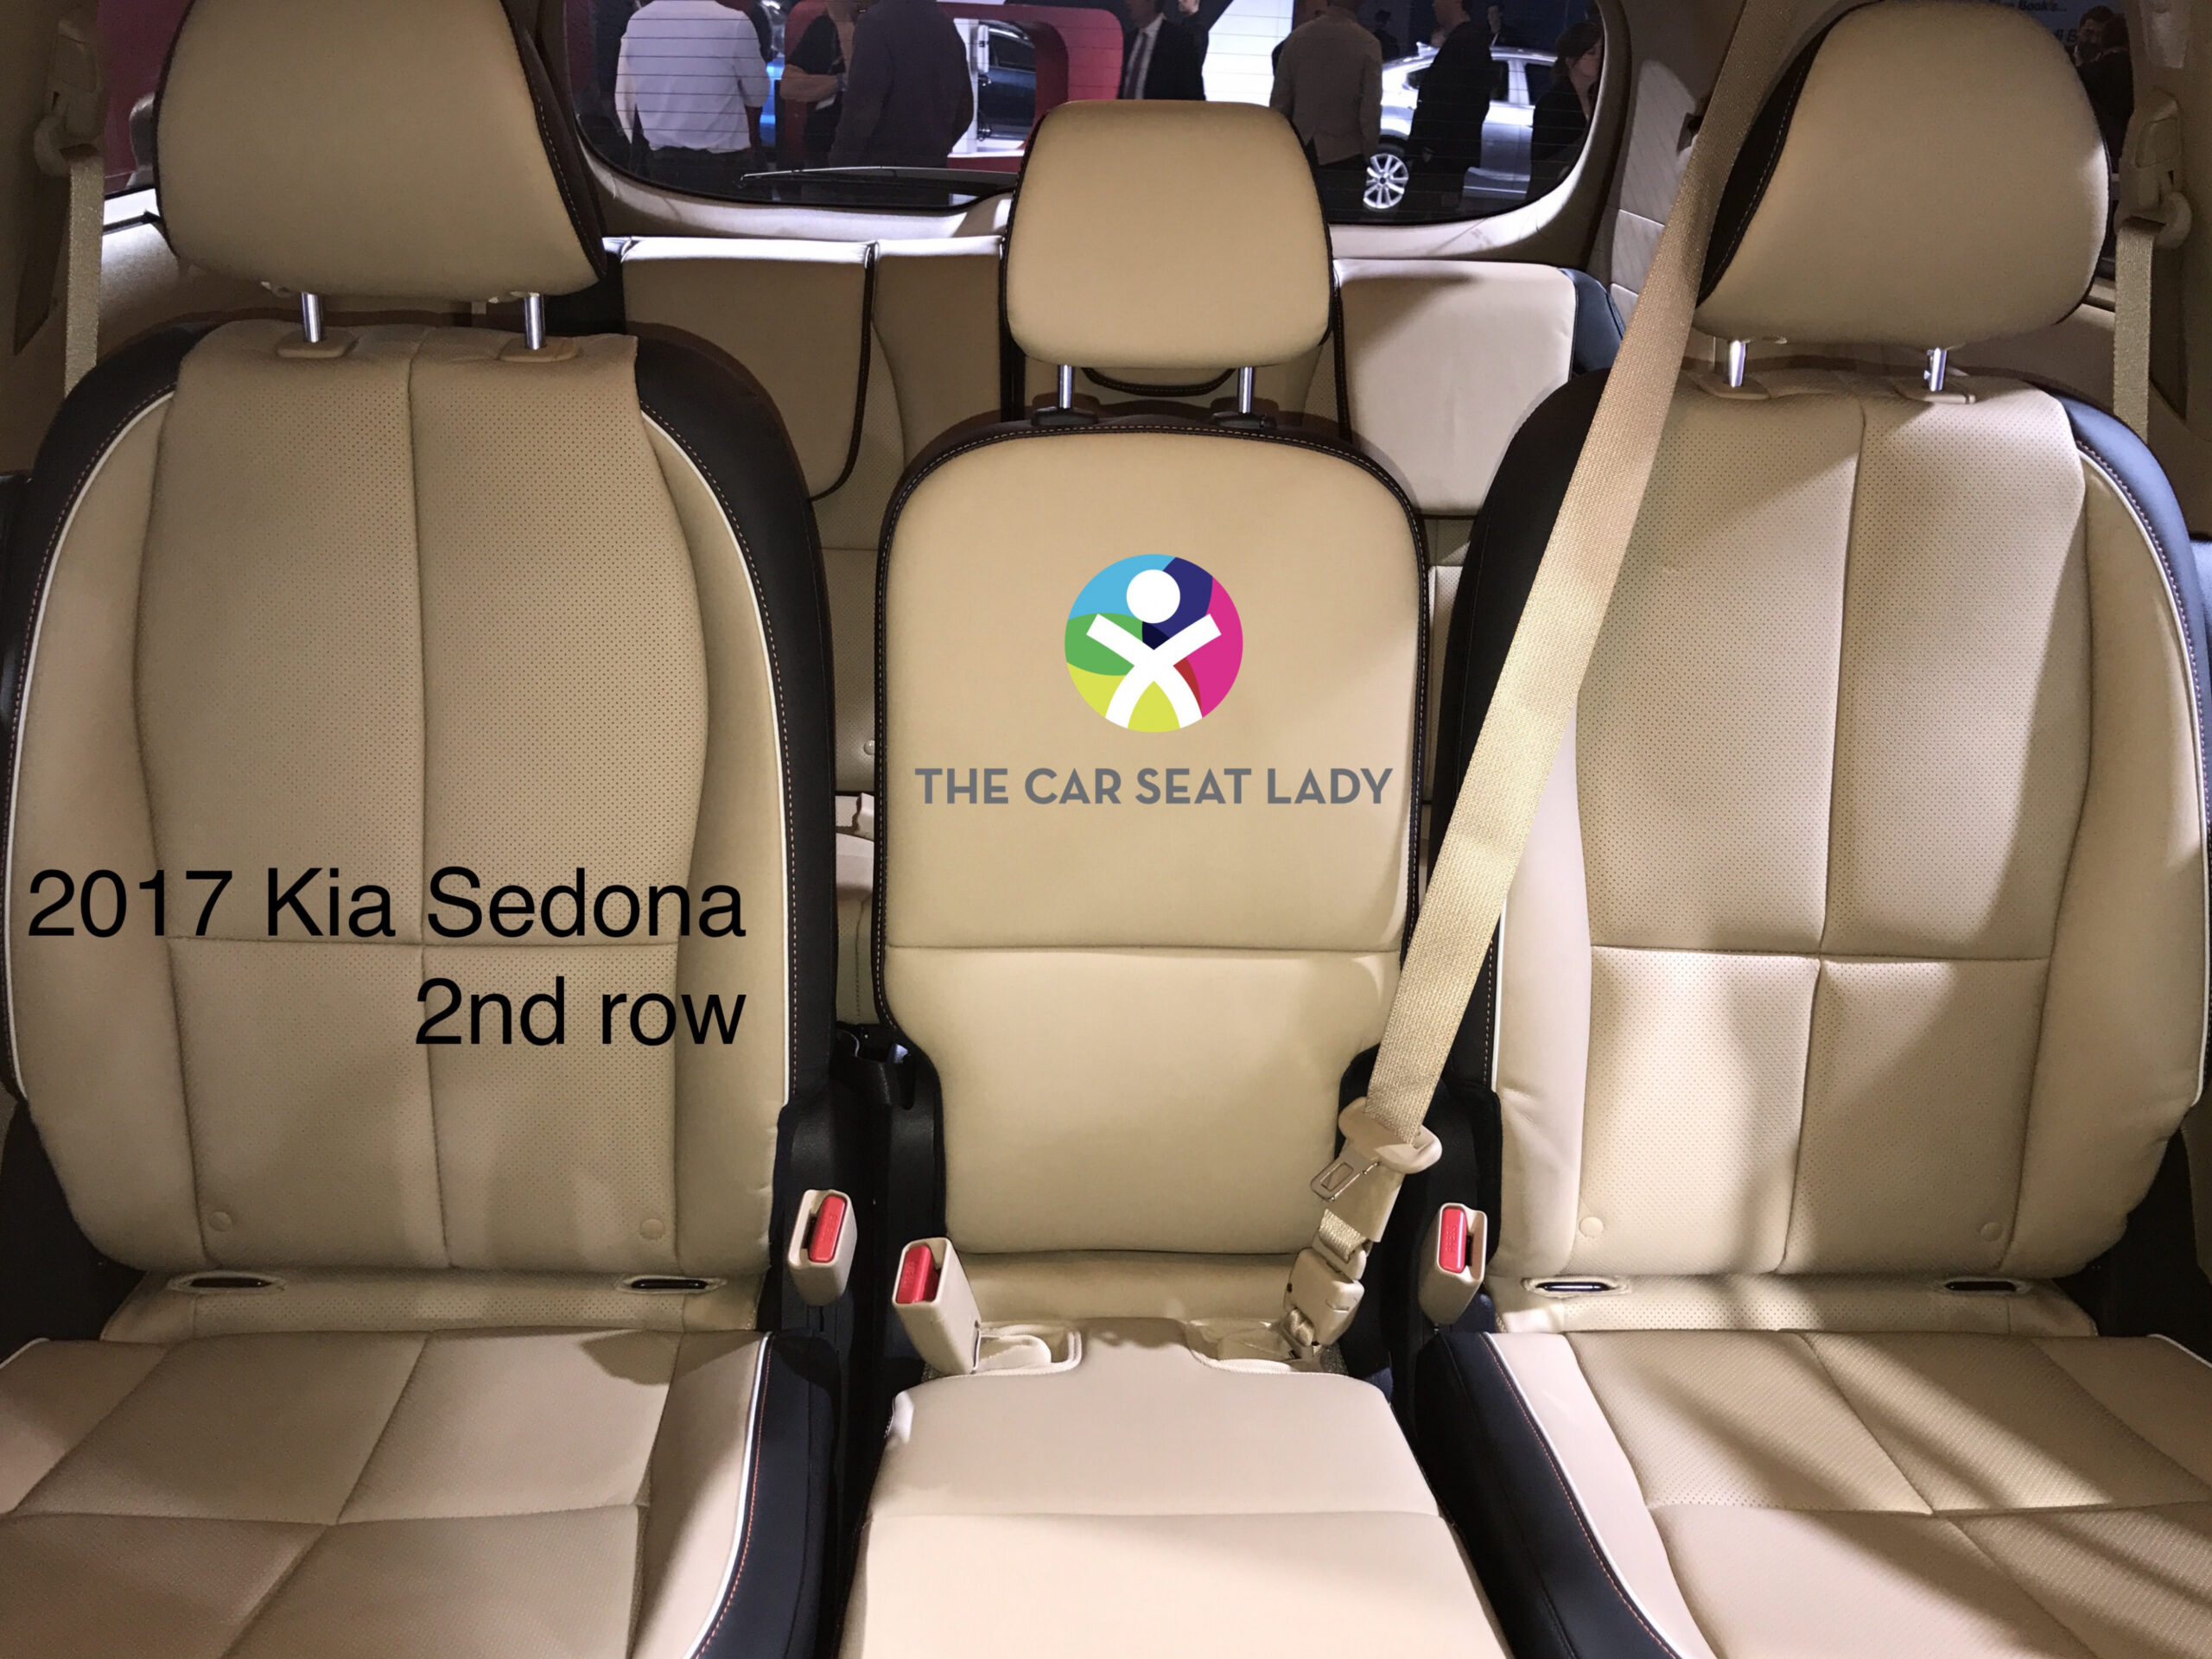 The Car Seat LadyKia Sedona - The Car Seat Lady - kia sedona seat covers